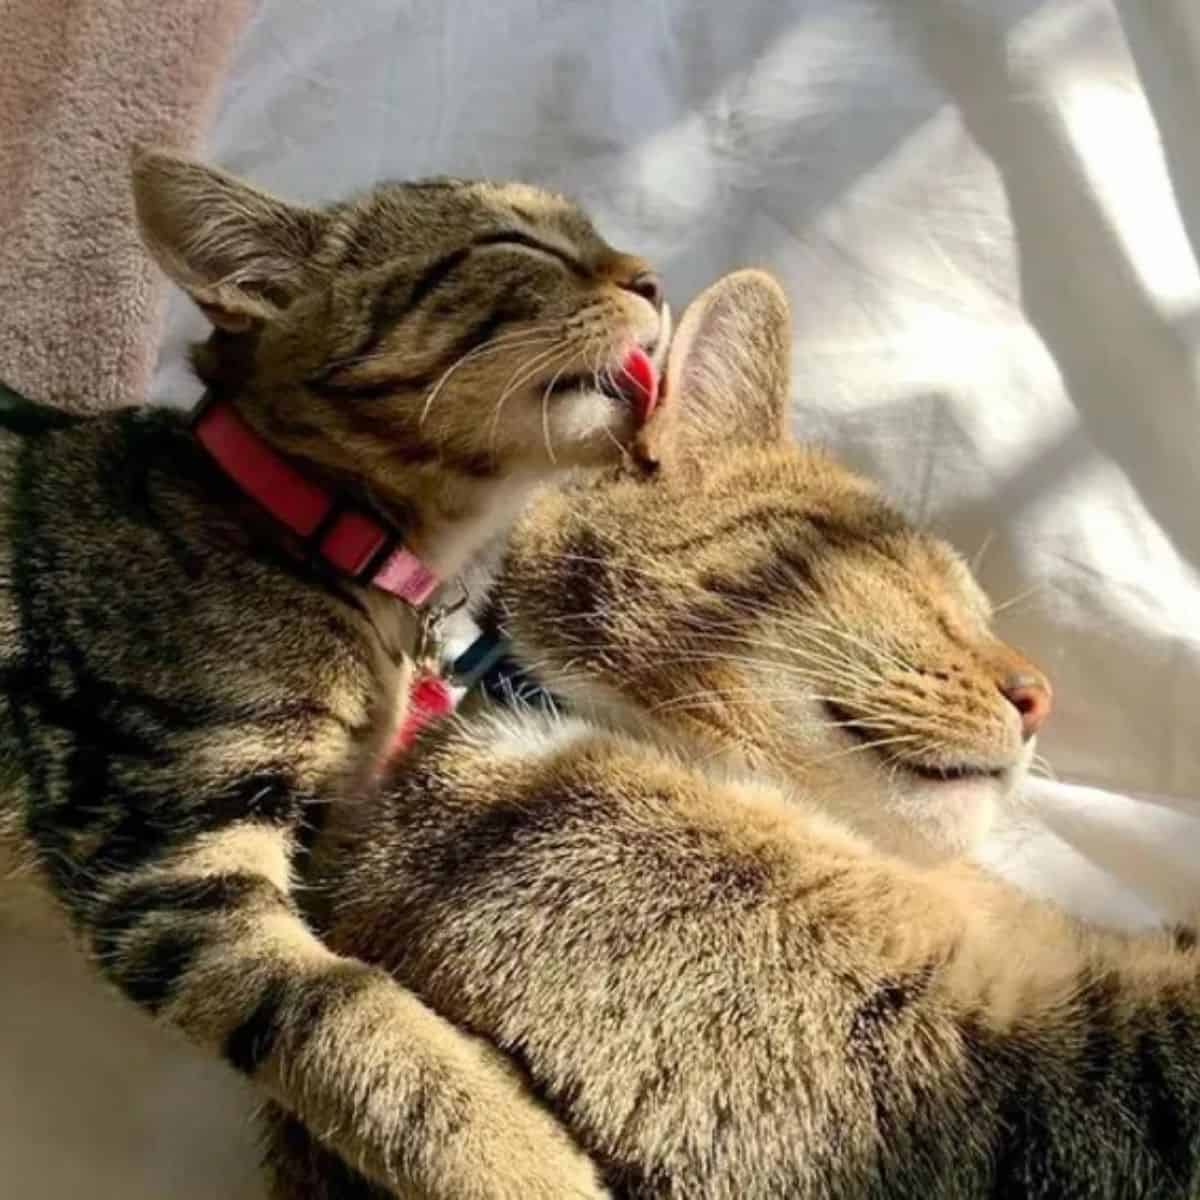 the kitten licks the mother cat